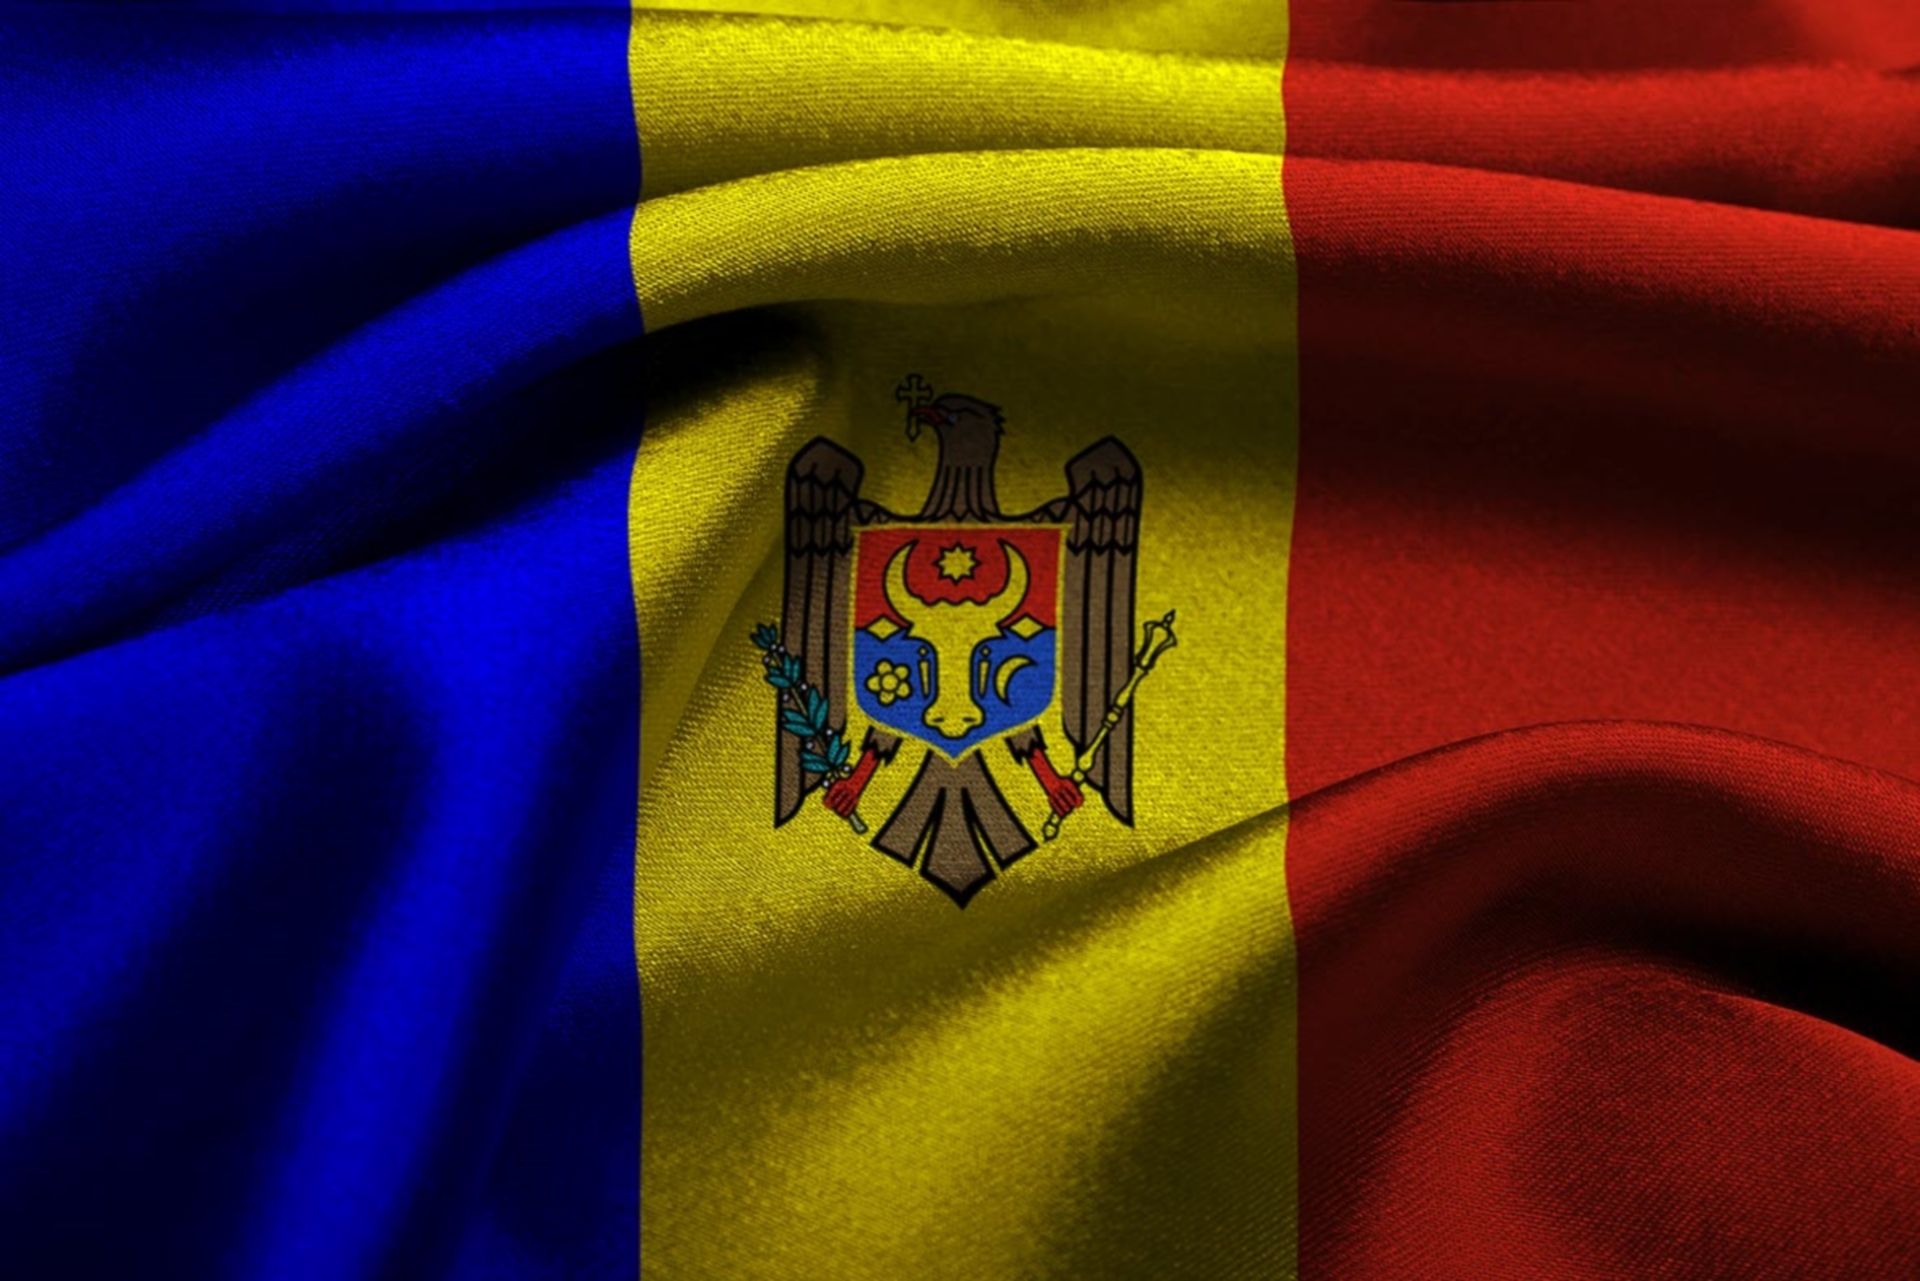 Republica moldova. Прапор Молдови. Флаг Республики Молдова. Флаг Молдавии флаг Молдавии. Кишинев флаг Молдовы.